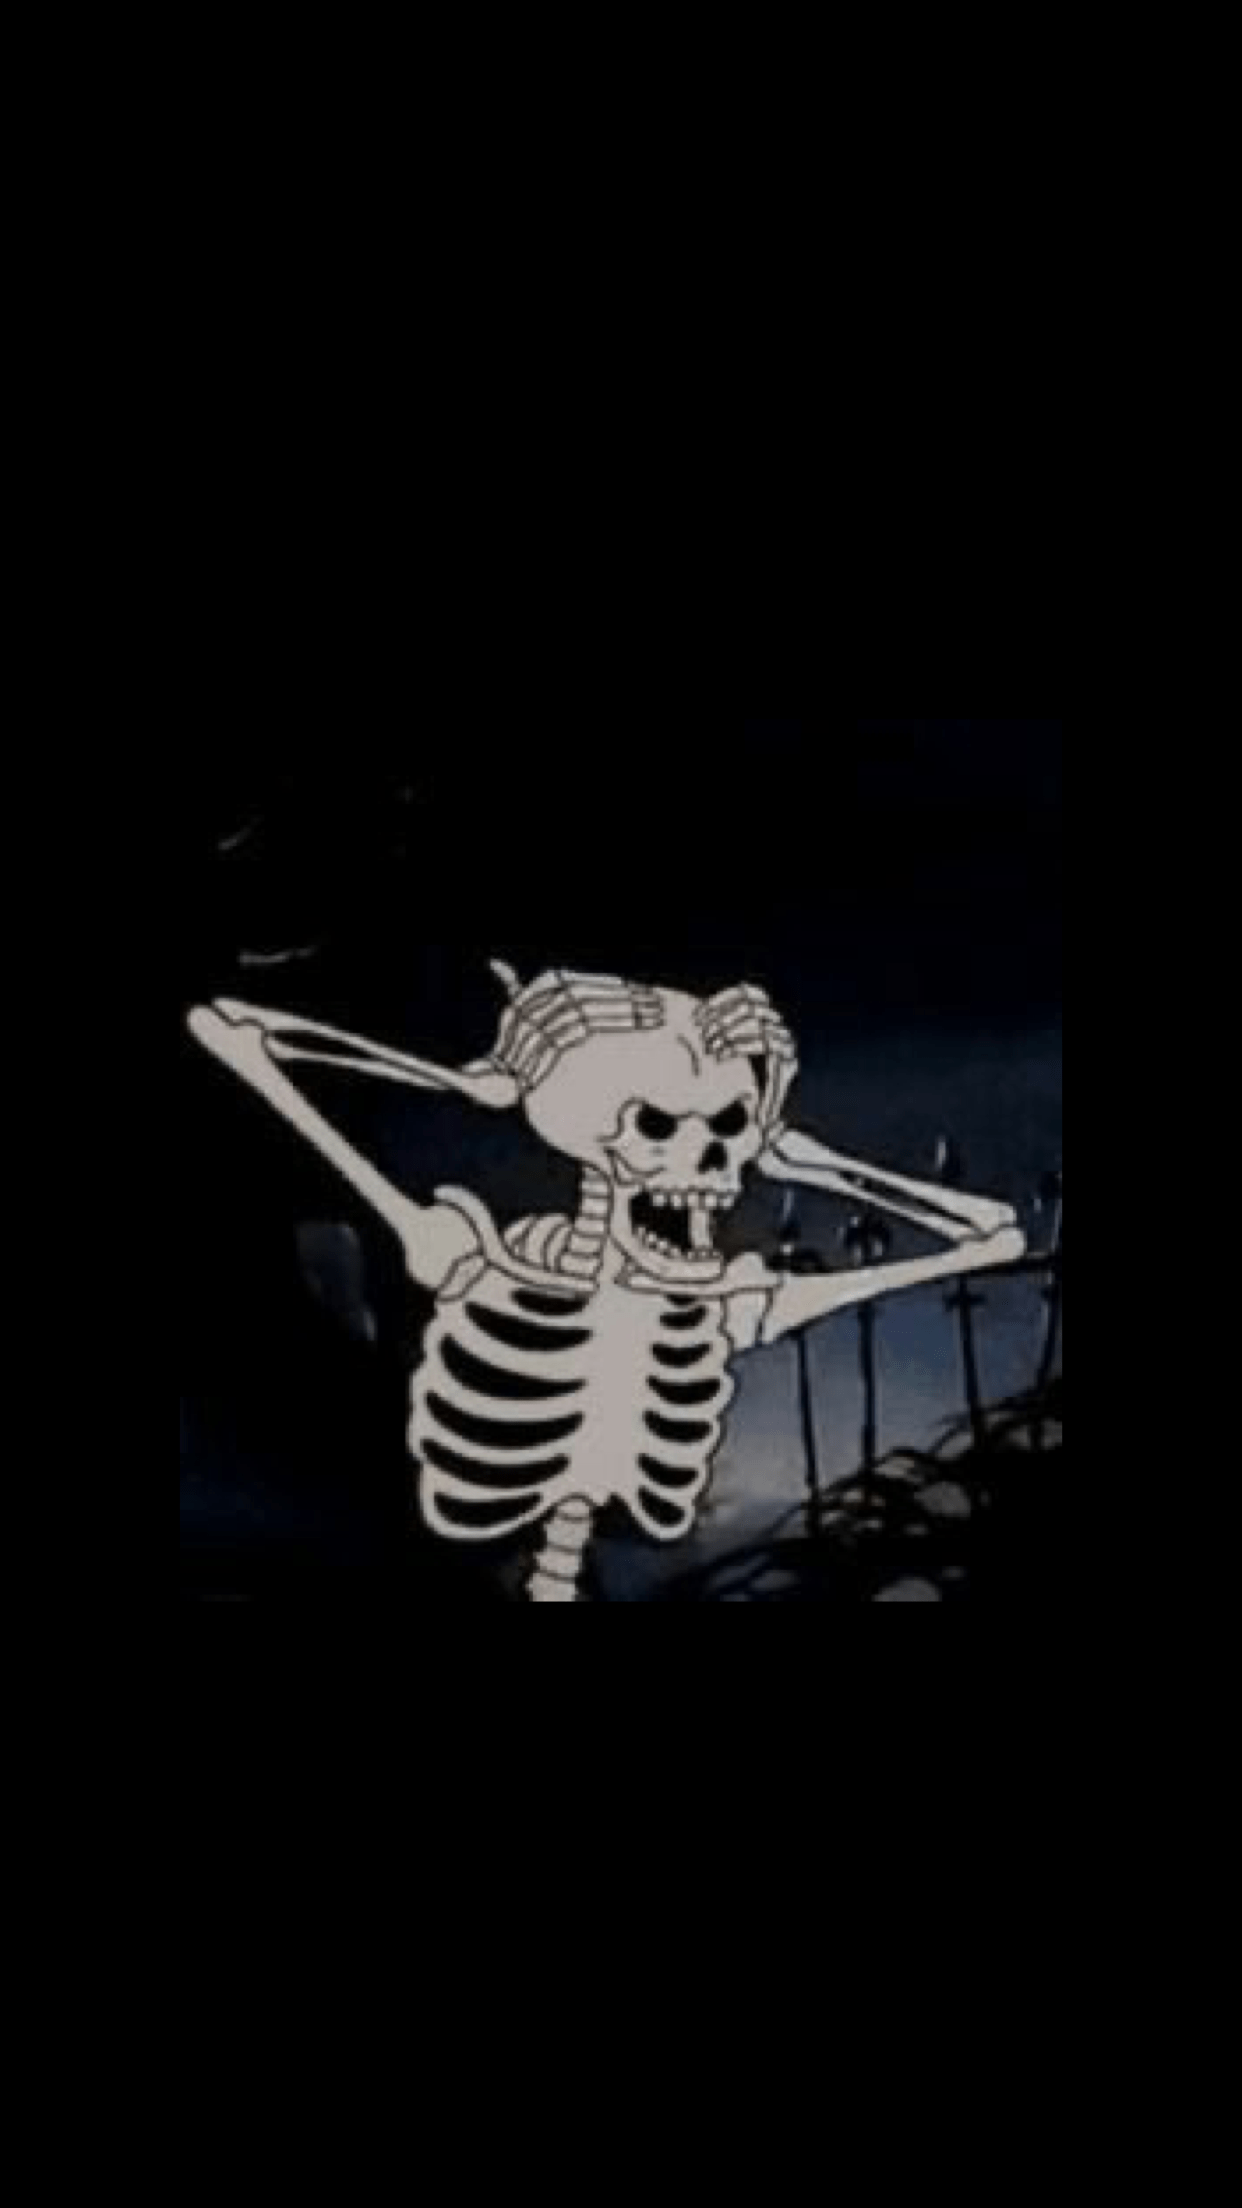 A skeleton is holding up an umbrella - Grunge